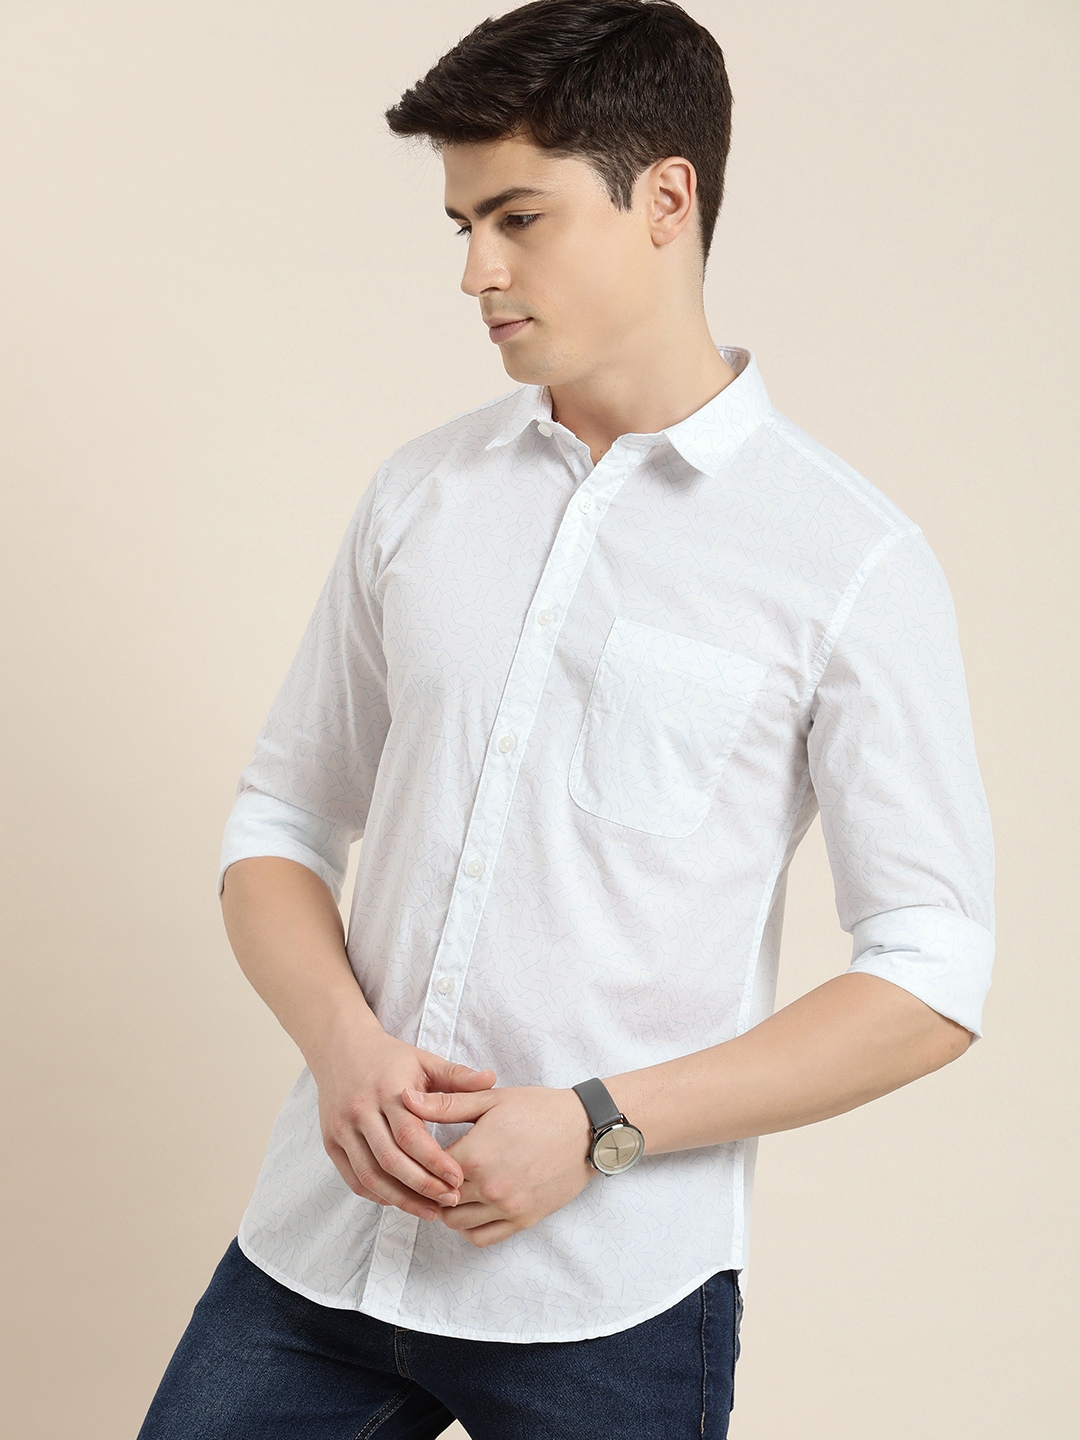 Buy INVICTUS Slim Fit Geometric Printed Pure Cotton Casual Shirt ...